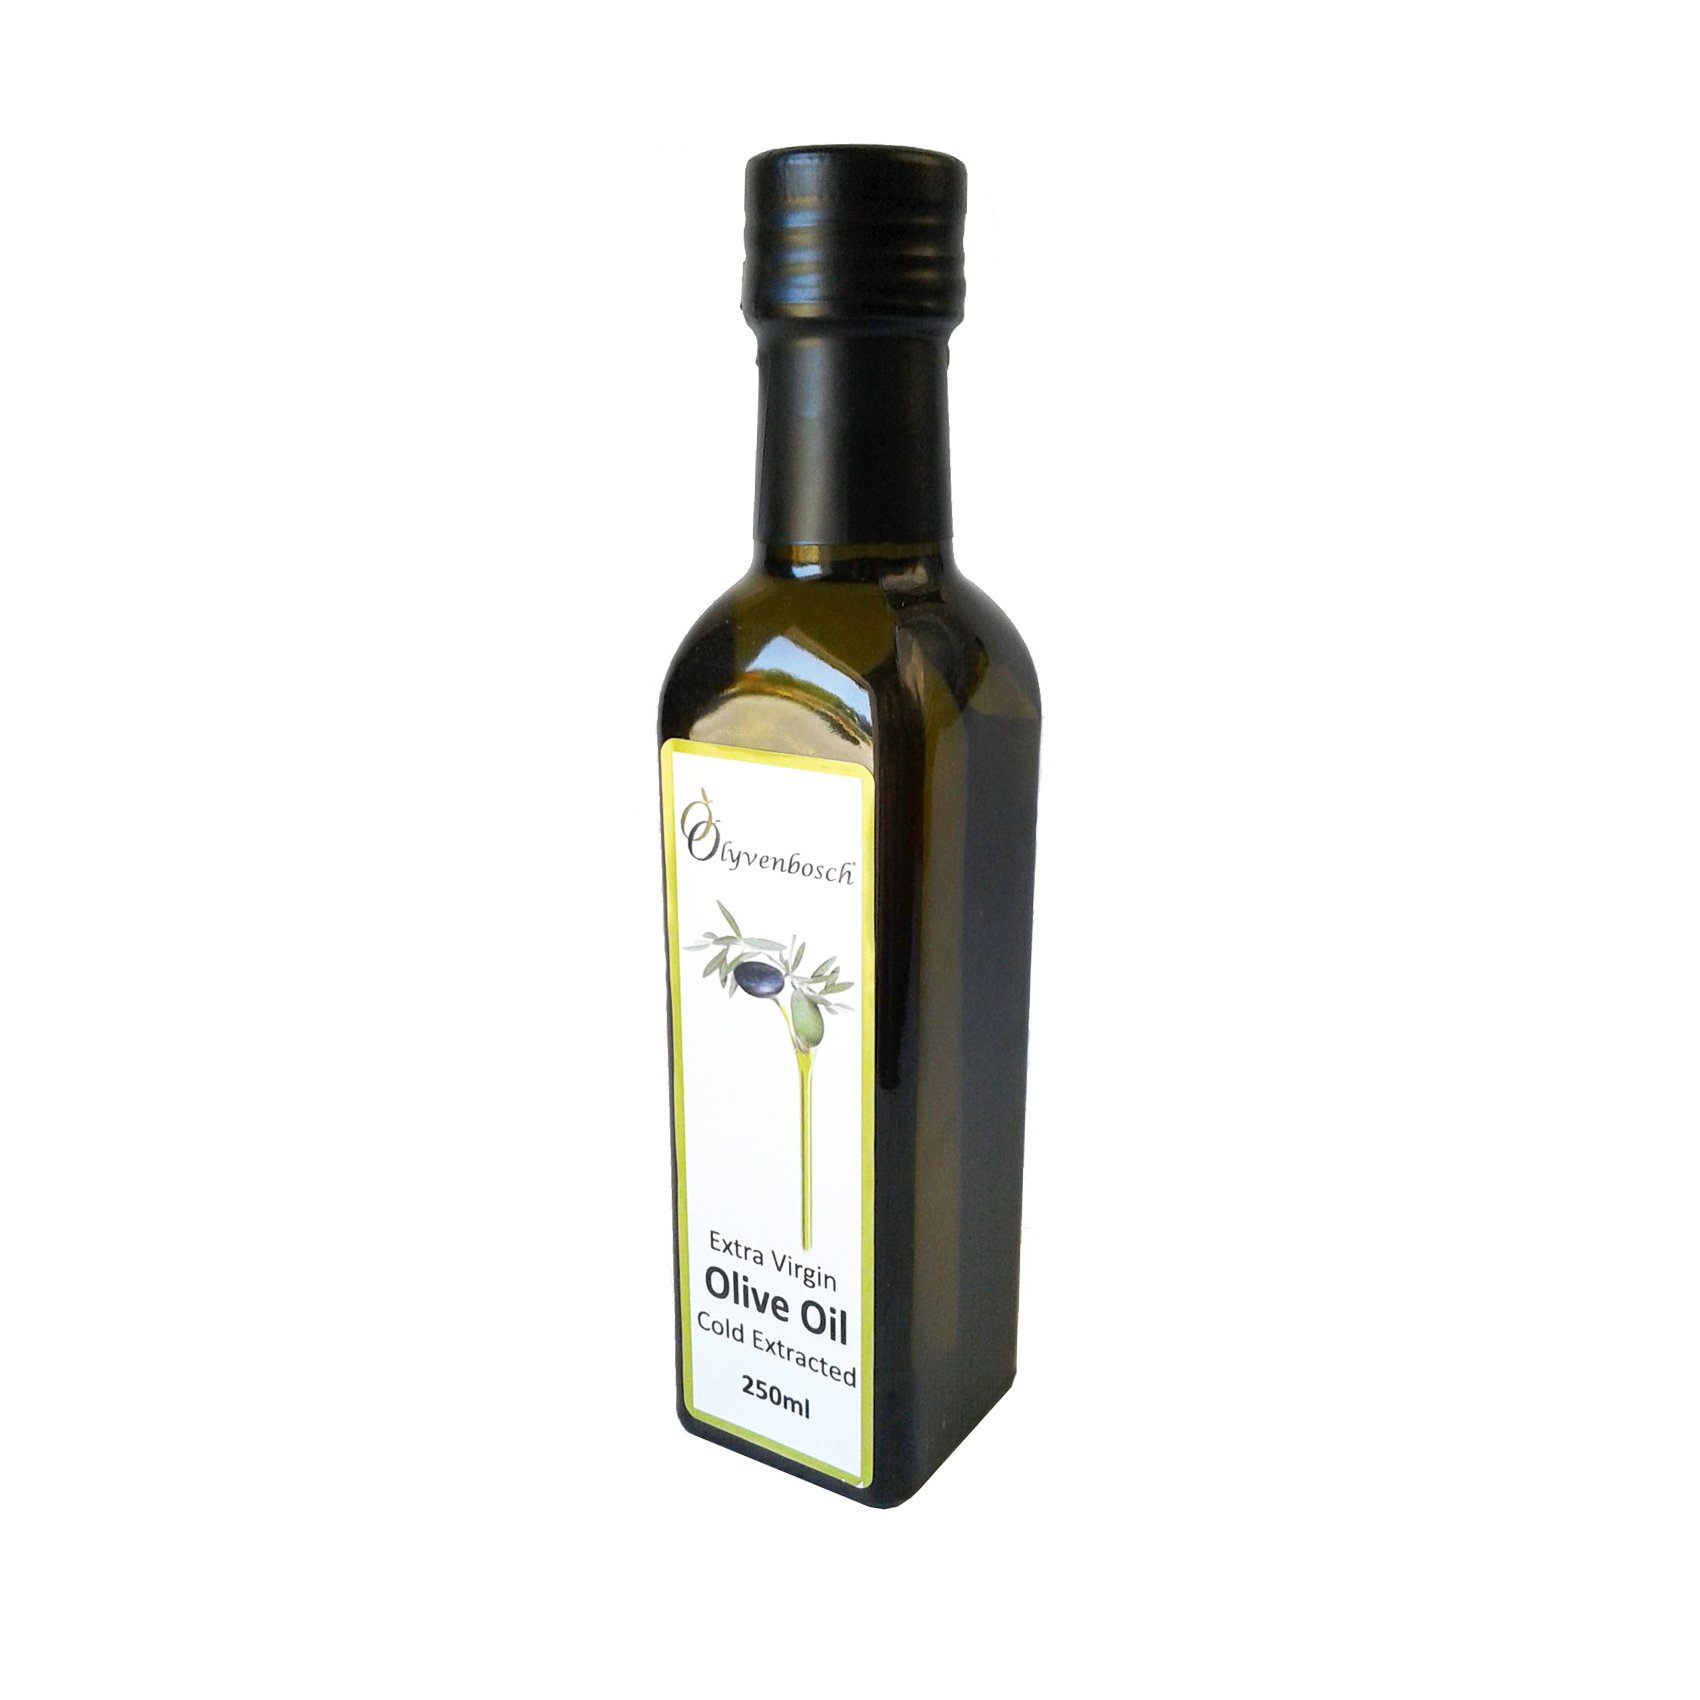 Olyvenbosch Extra Virgin Olive Oil 250ml Glass Bottle food Olyvenbosch Olive Farm